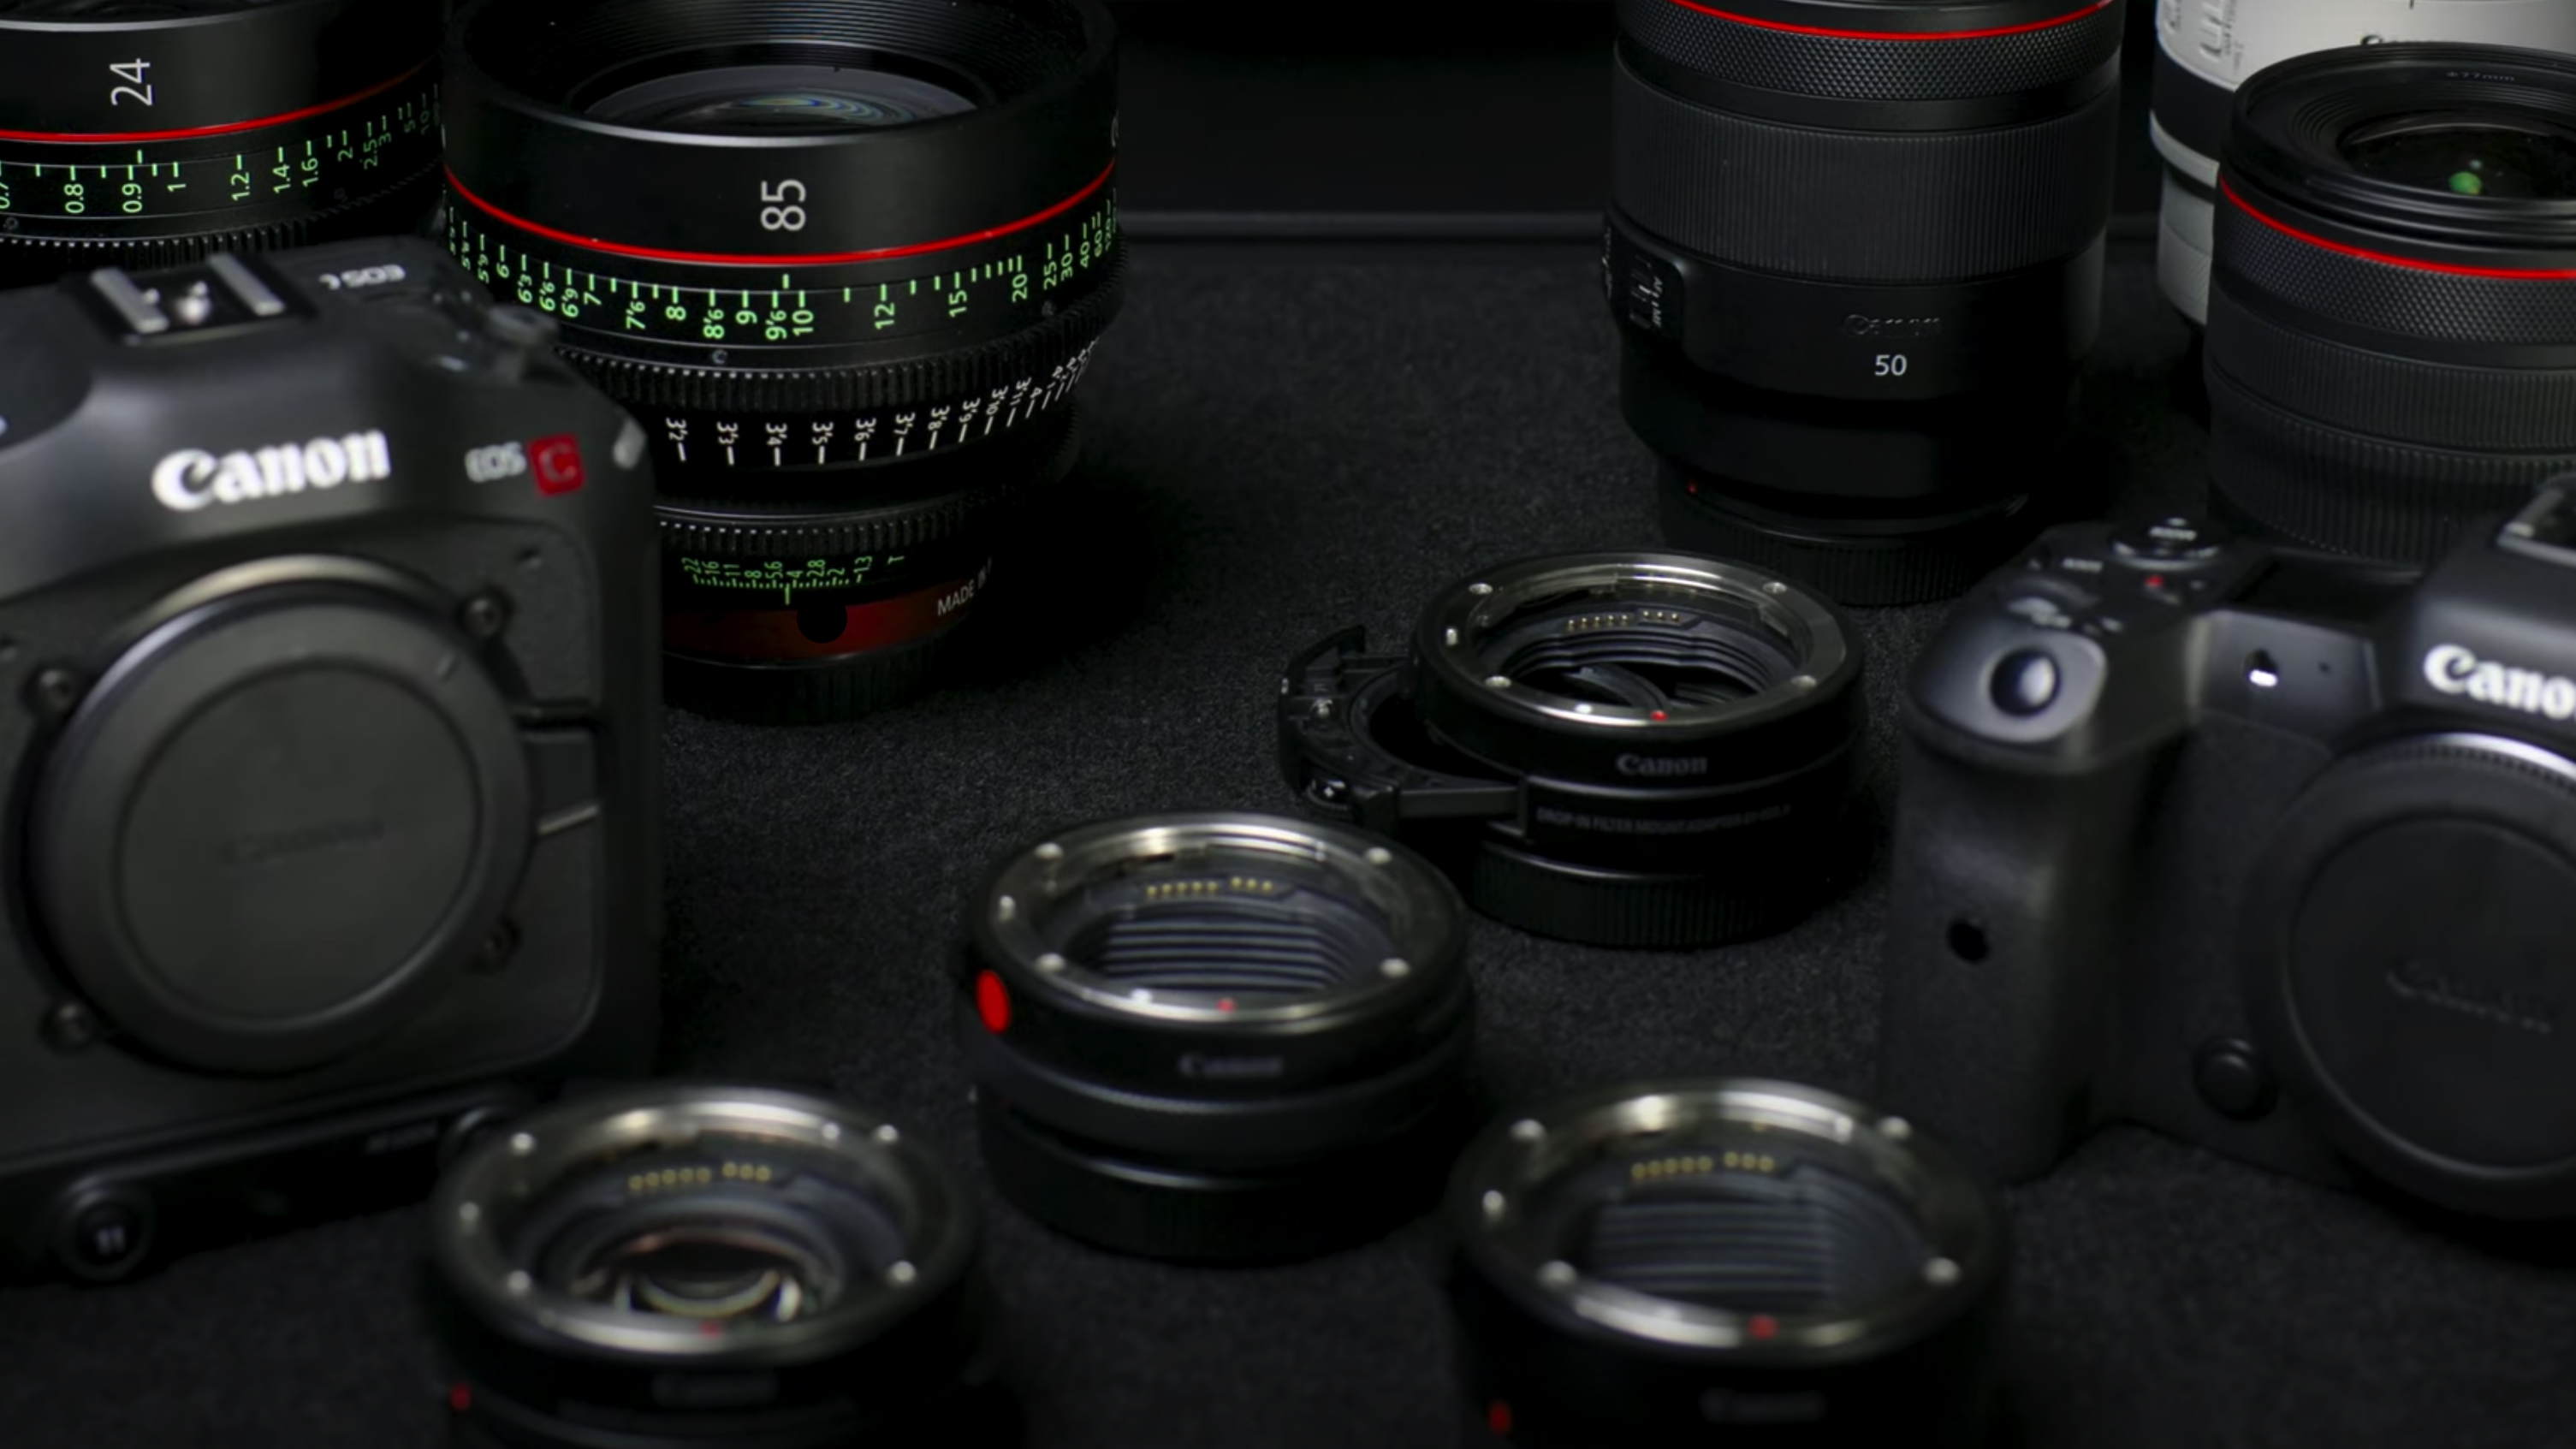 The Canon EOS R5 C sat amongst a range of lenses